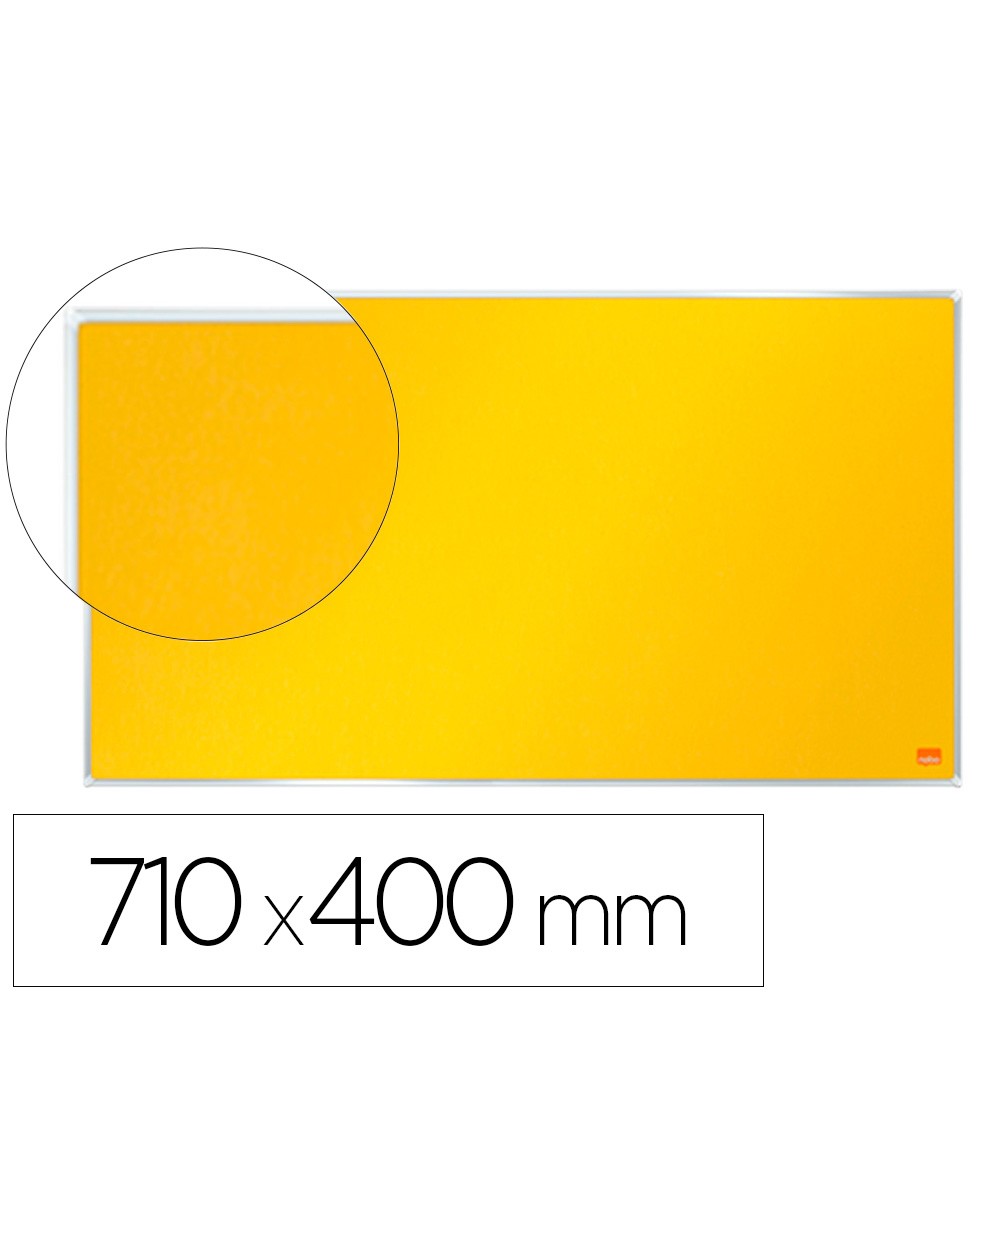 Tablero de anuncios nobo impression pro fieltro amarillo formato panoramico 32 710x400 mm